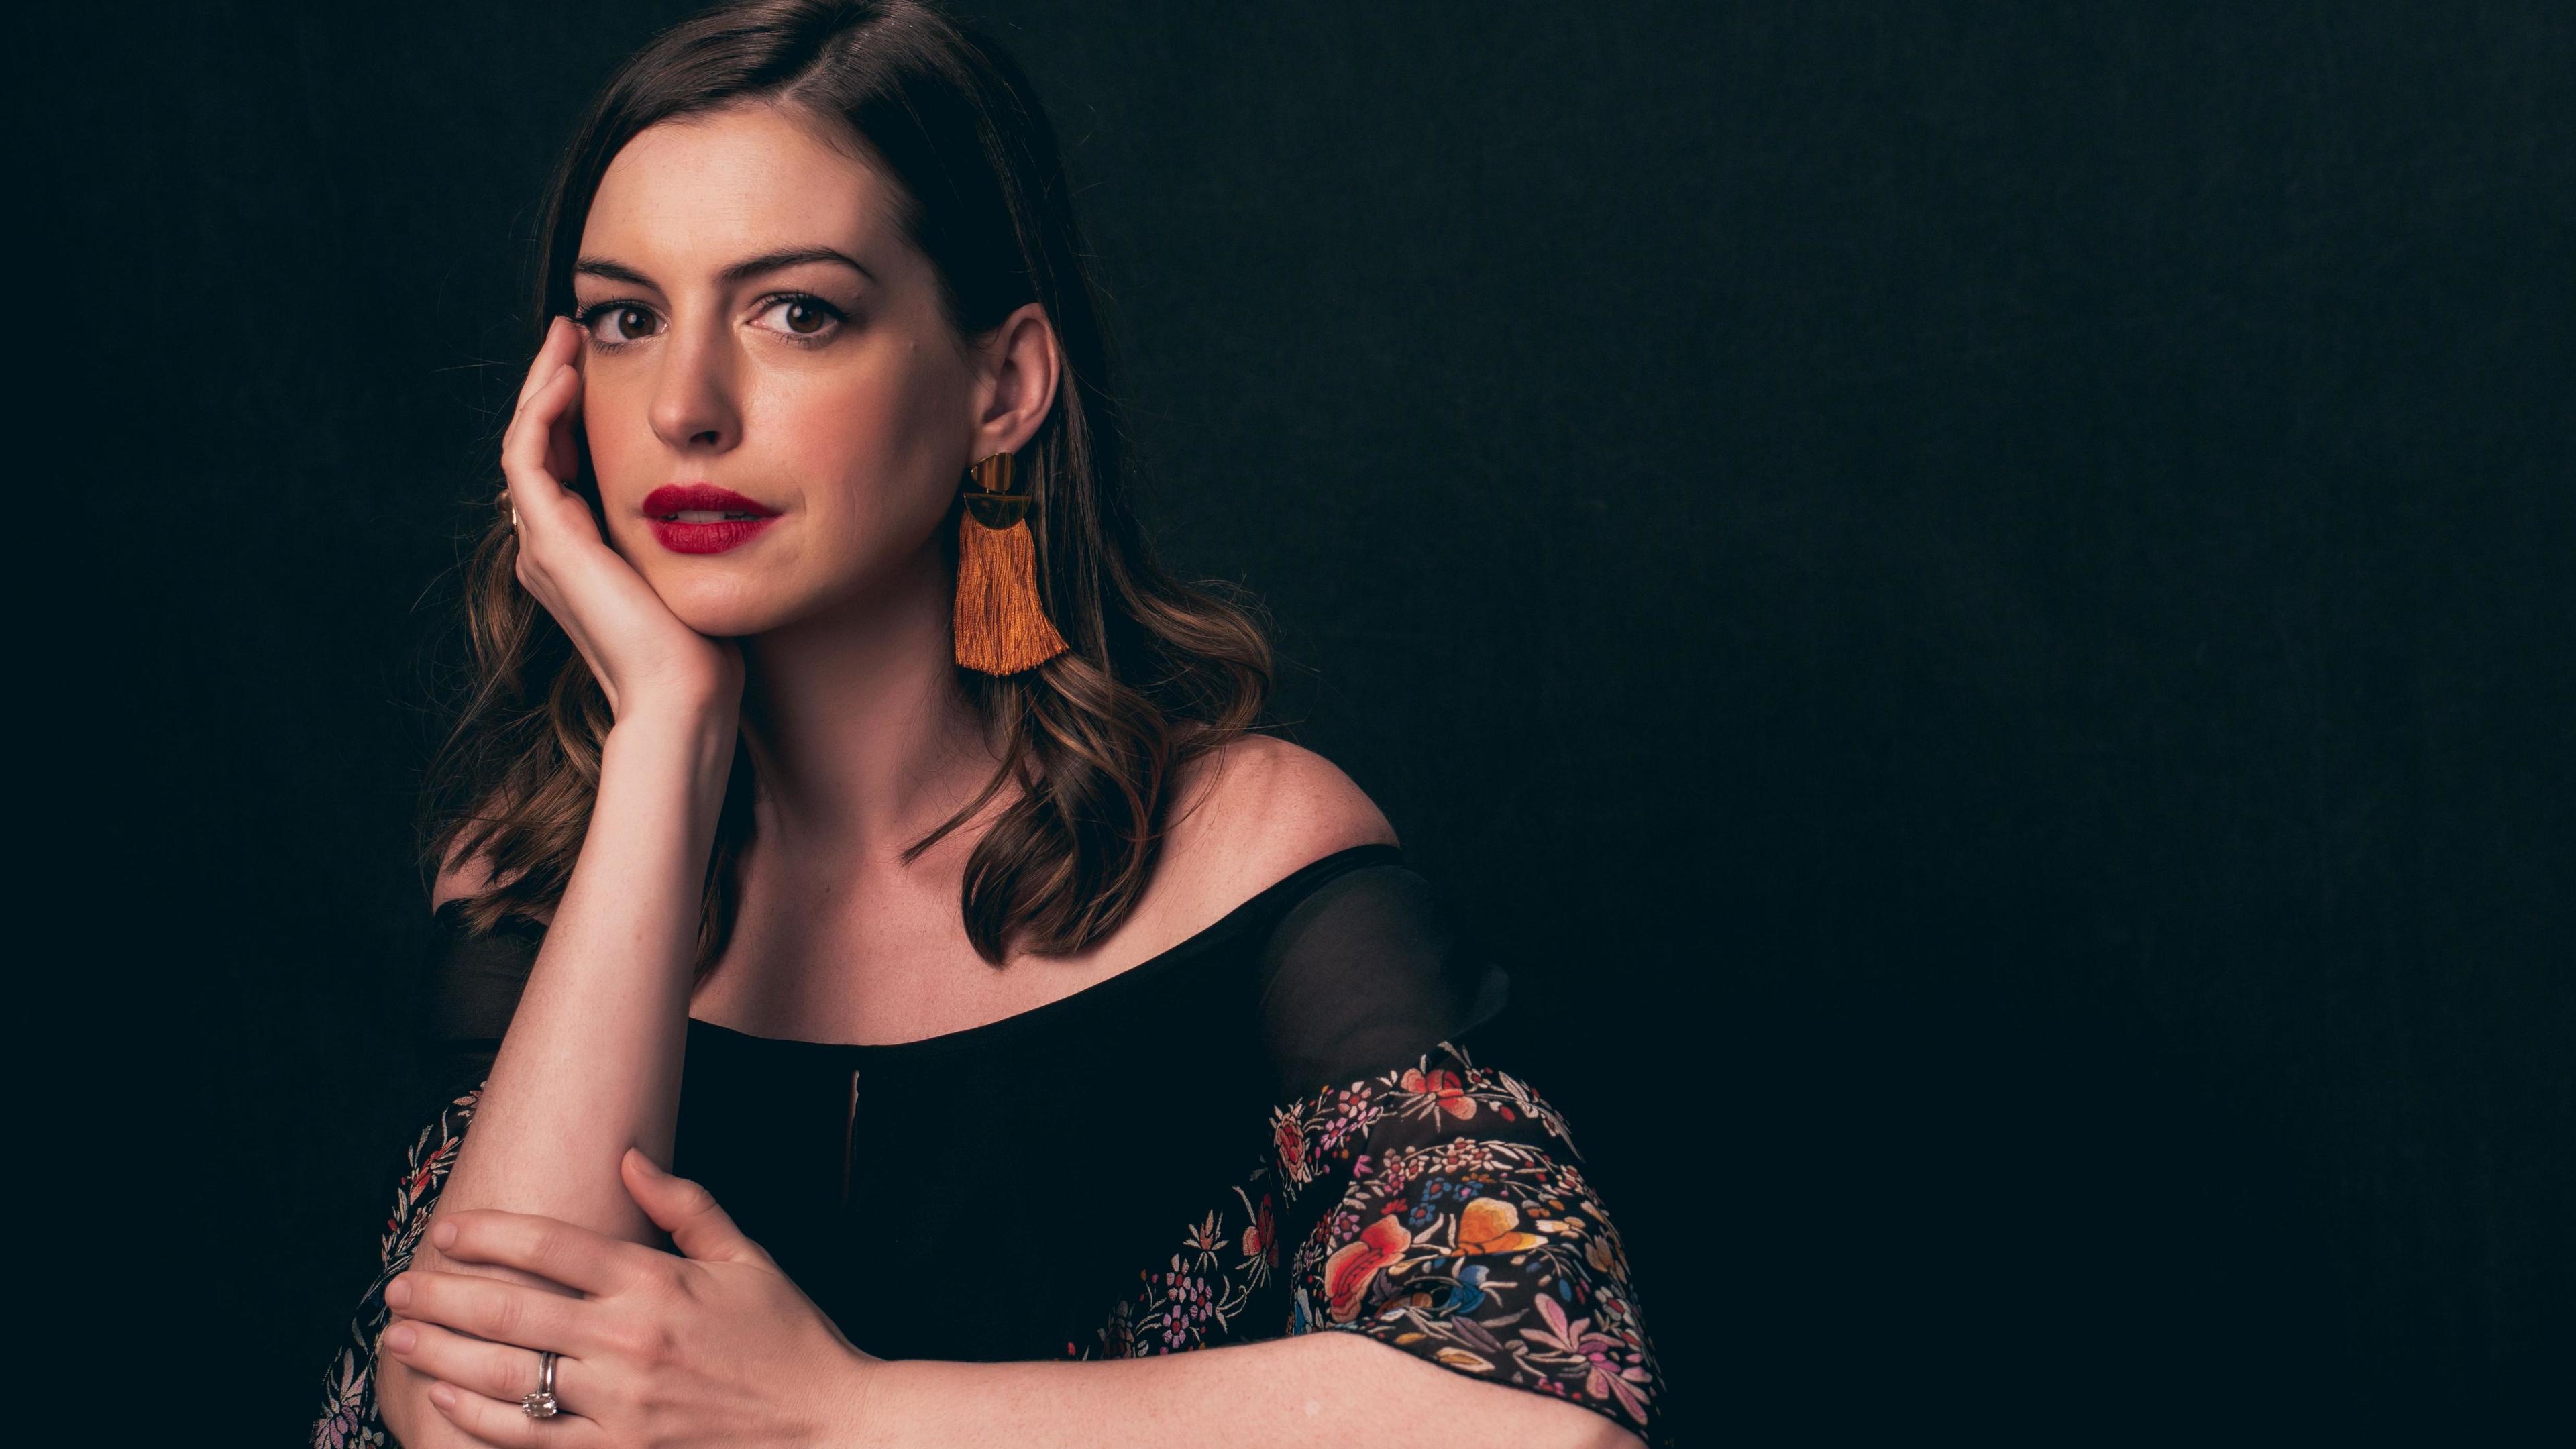 Anne Hathaway 2019 4k hd-wallpapers, girls wallpapers, celebrities